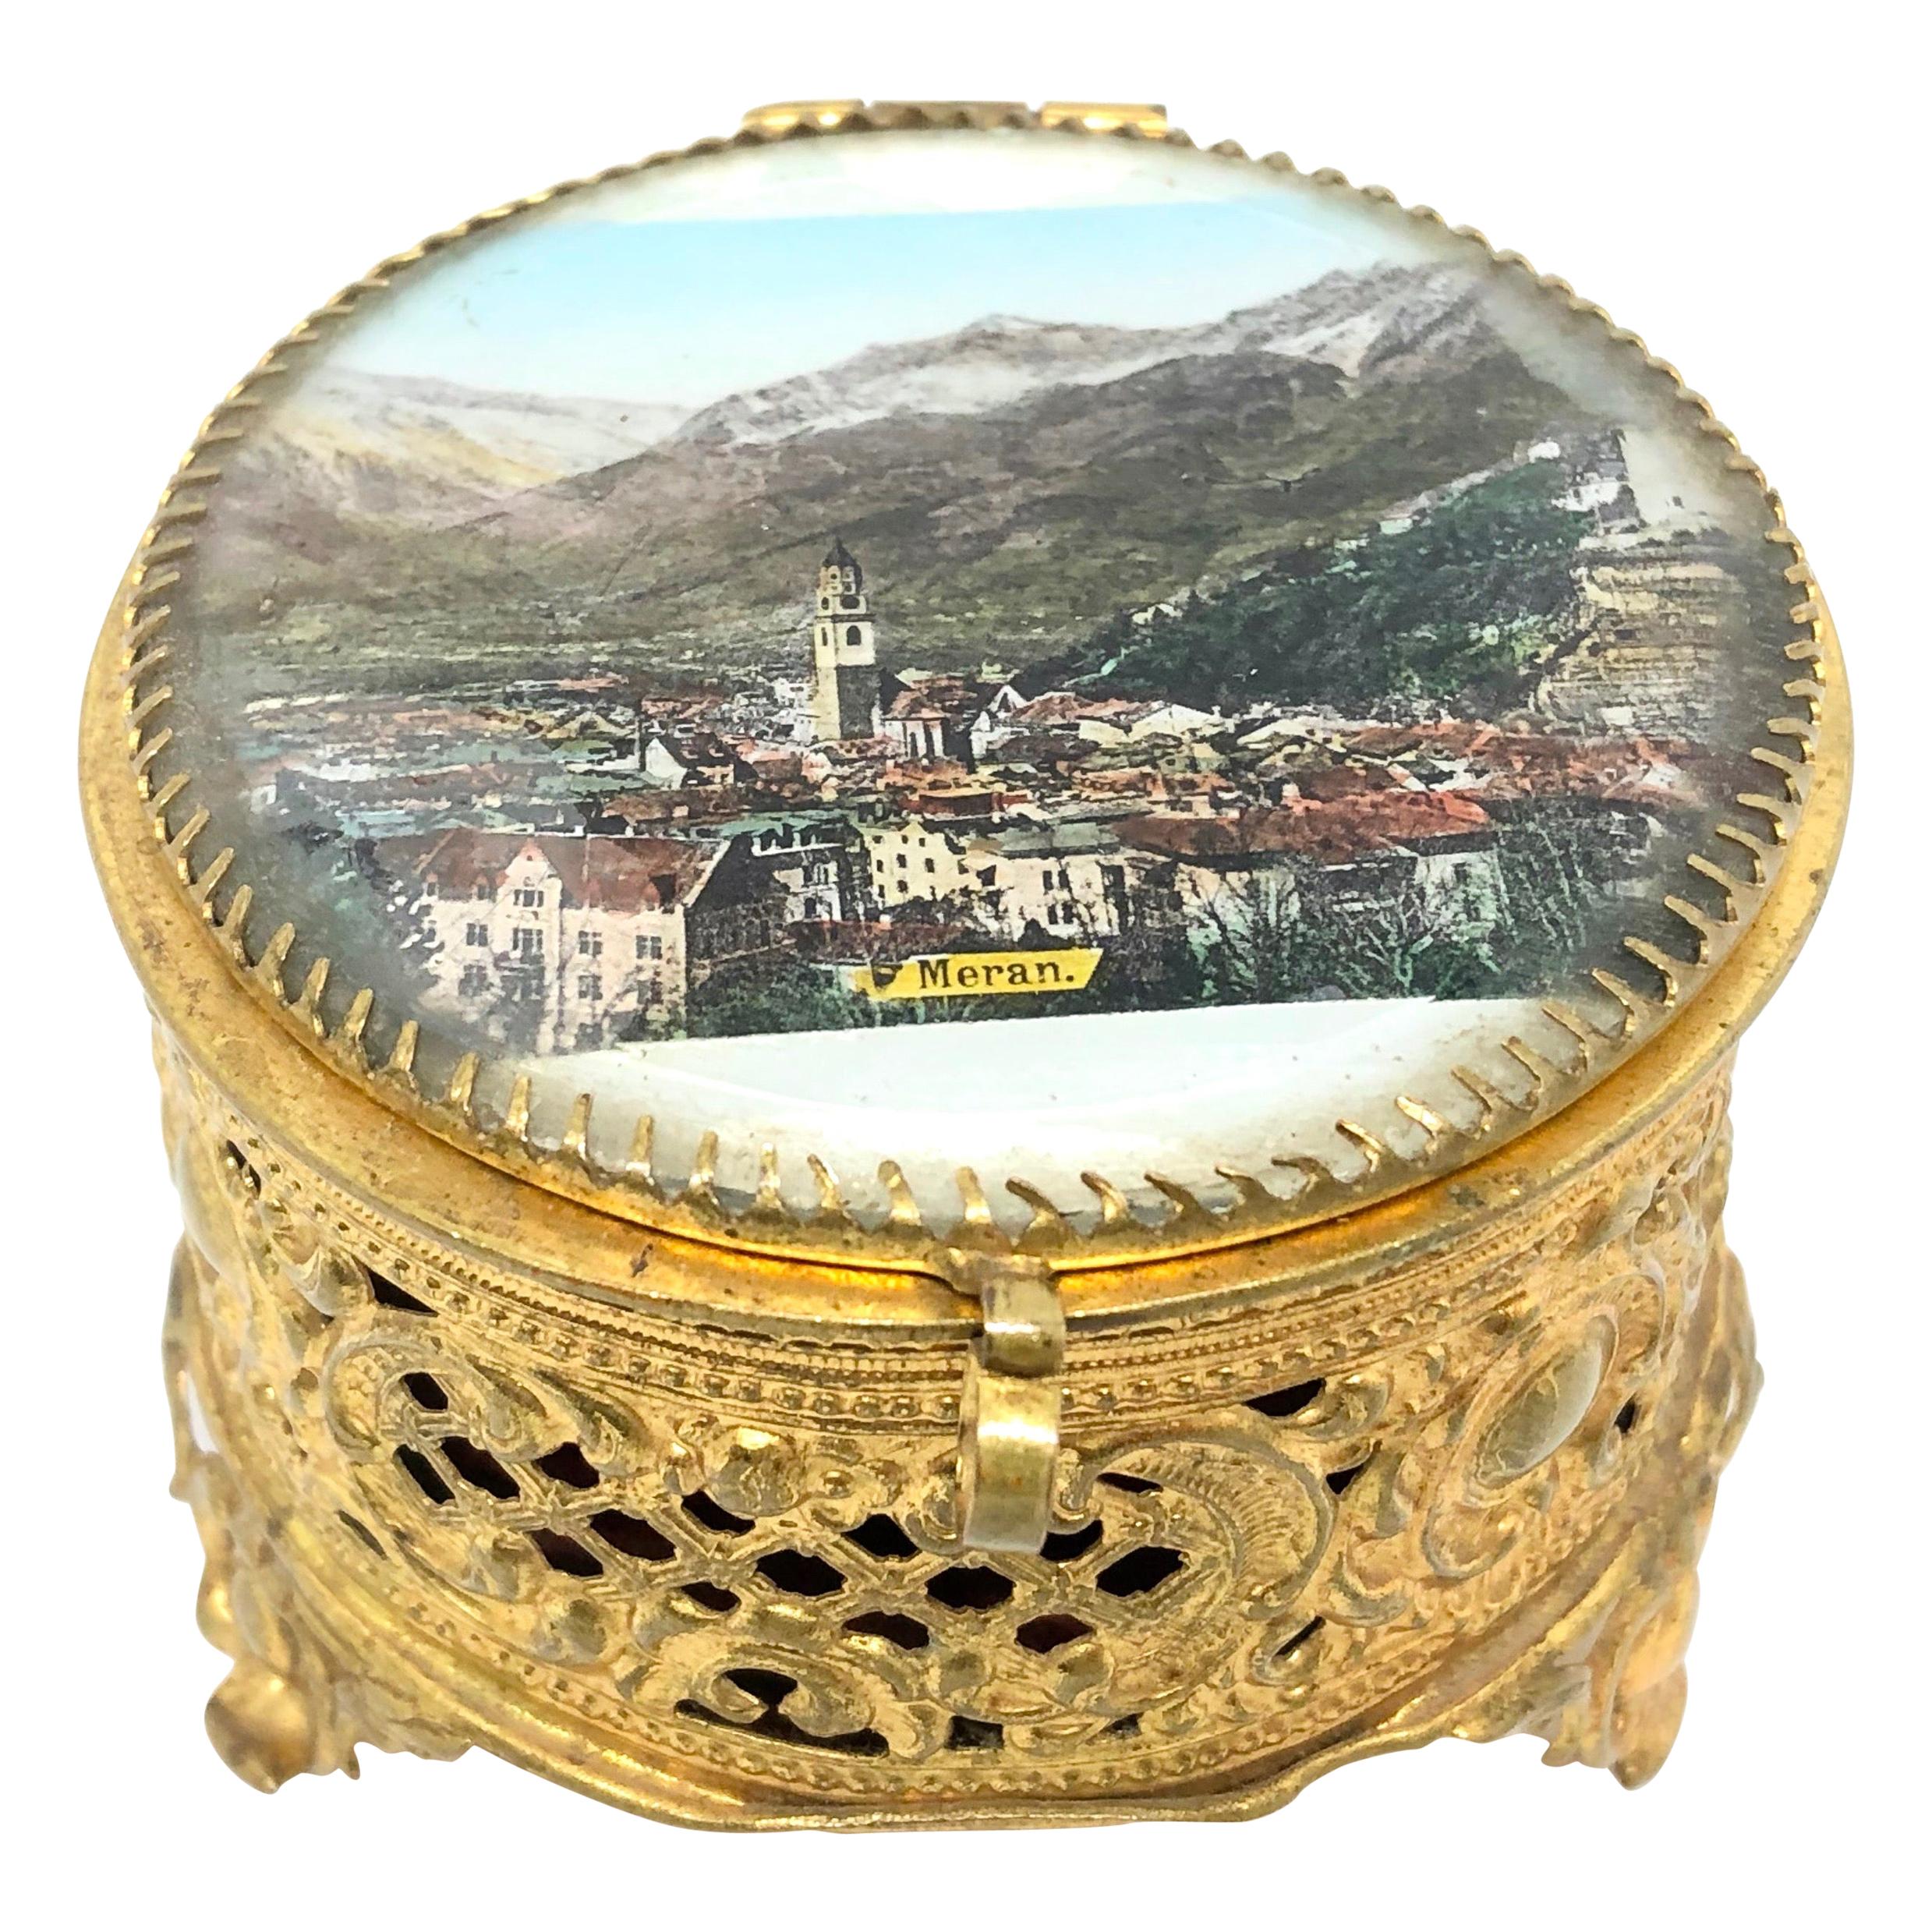 Ormolu and Glass Souvenir Trinket Jewelry Box, City of Meran, Italy, circa 1900s